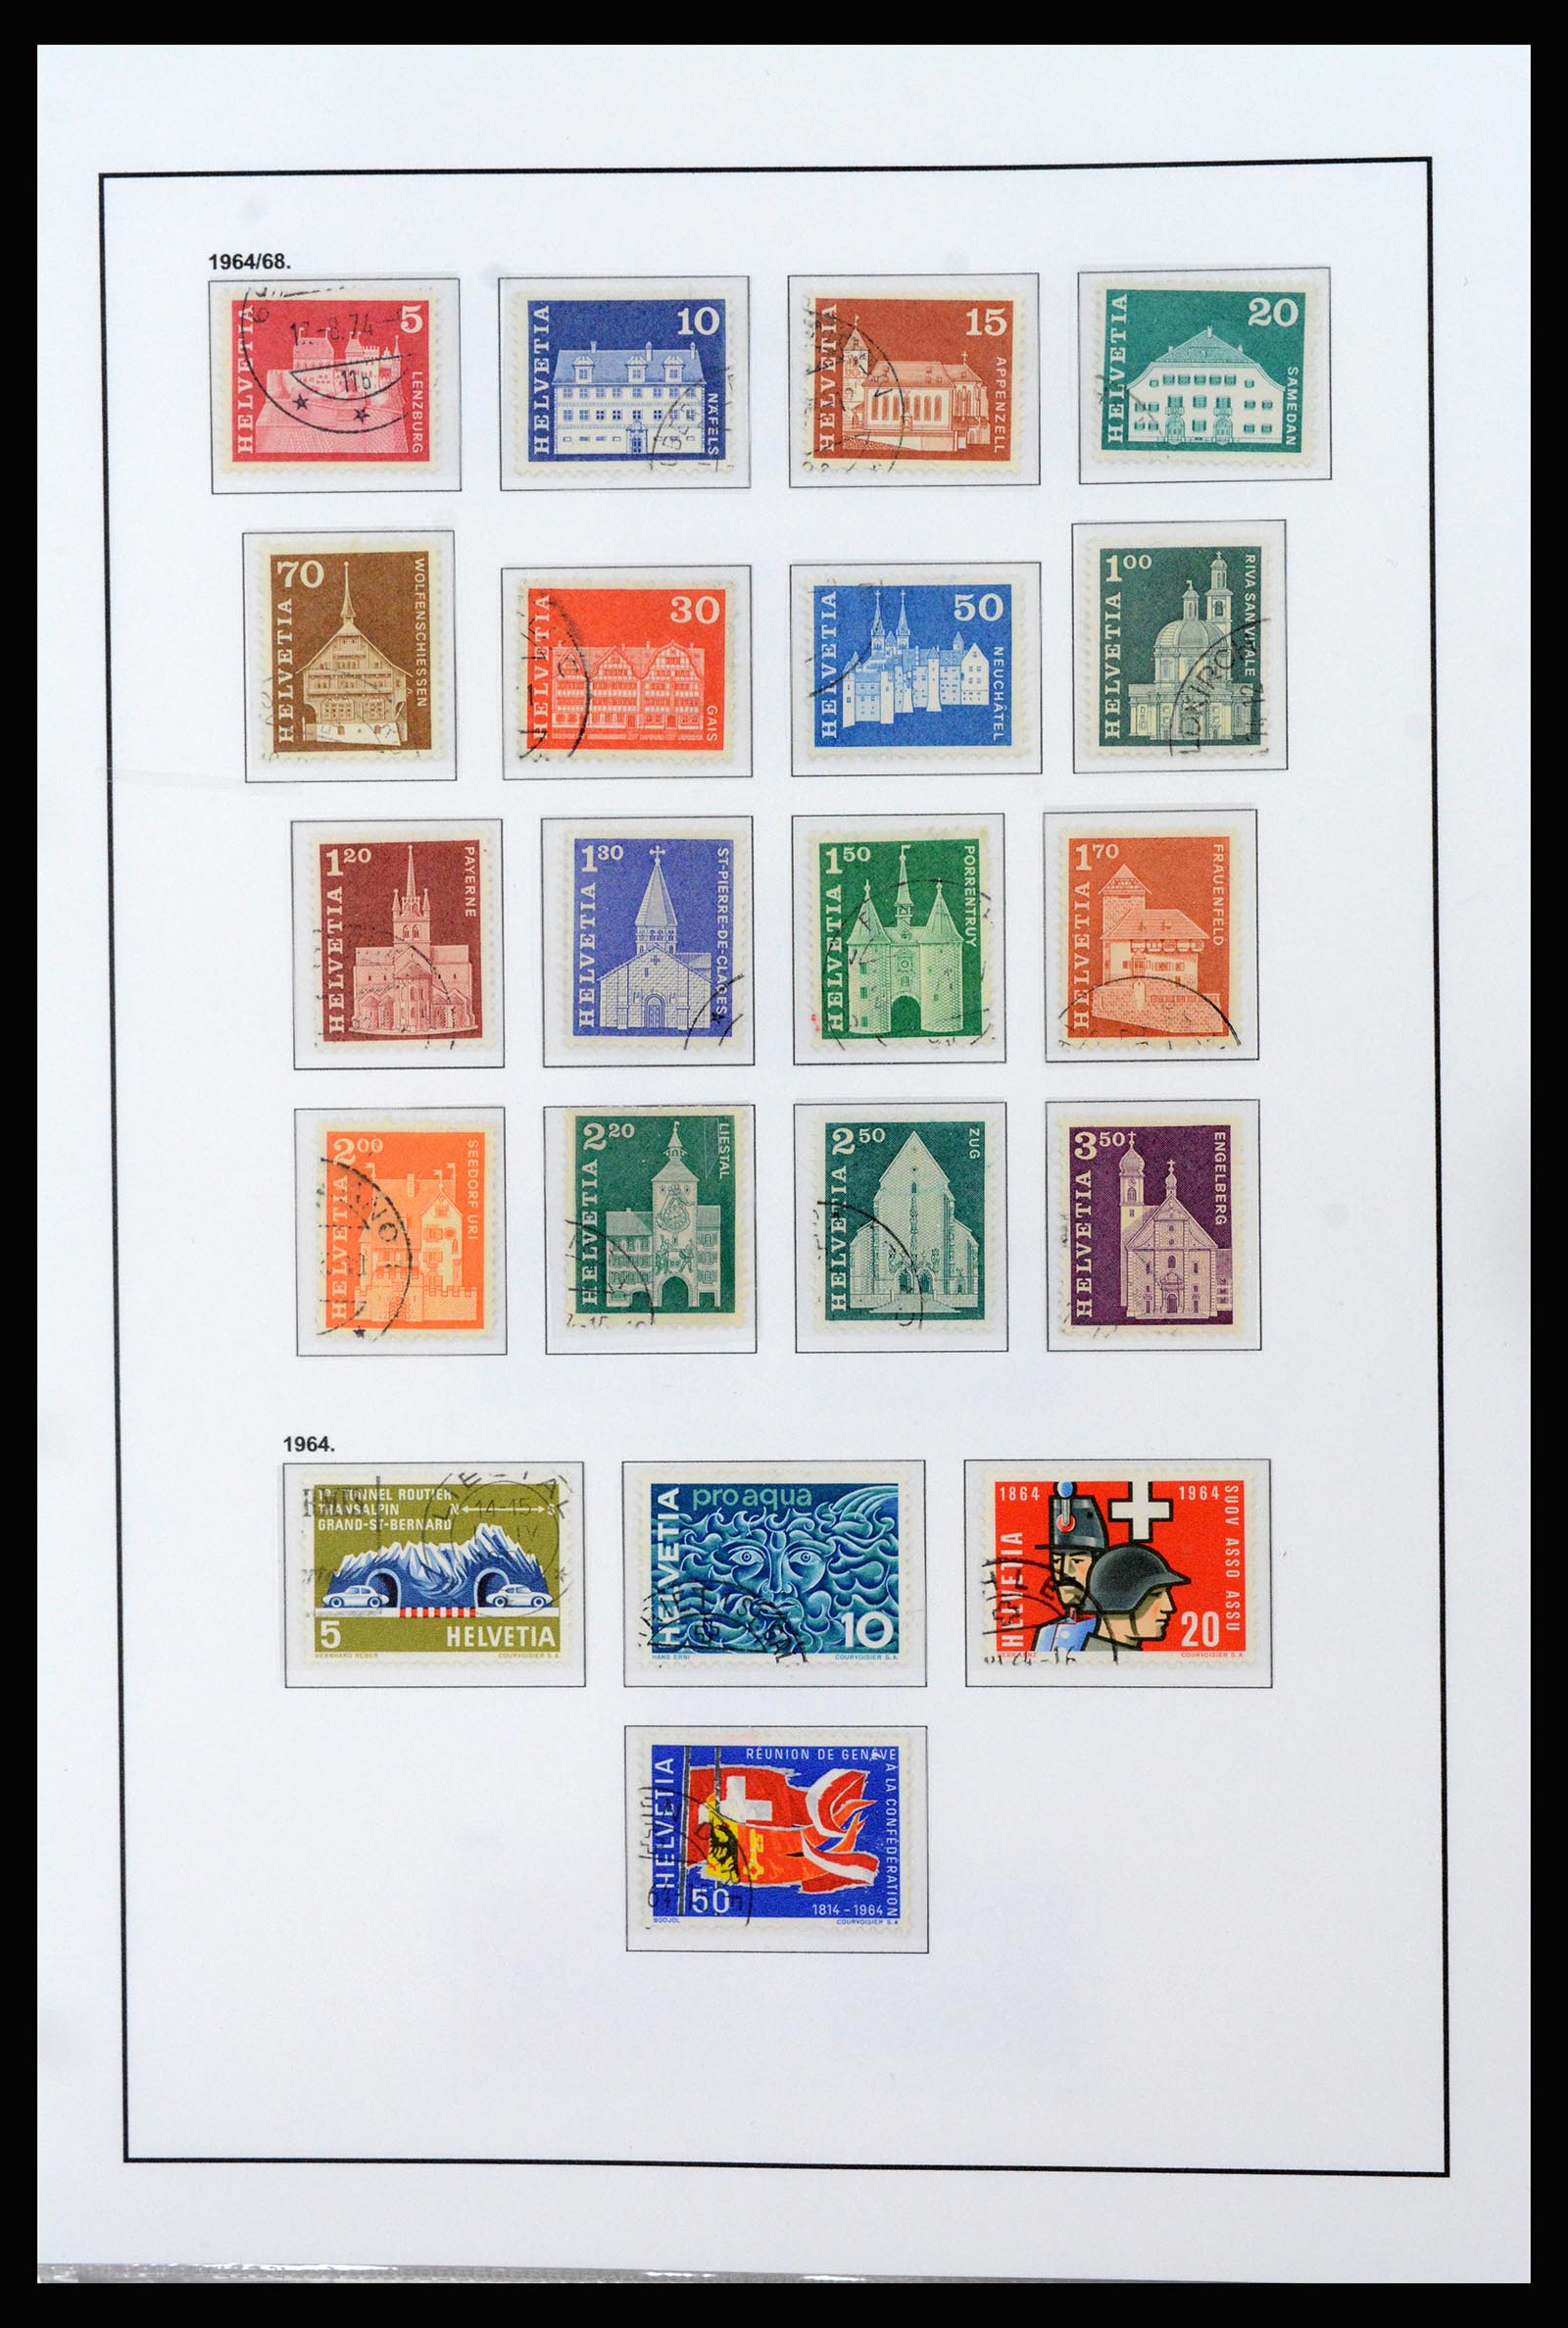 37225 024 - Stamp collection 37225 Switzerland 1854-2020.